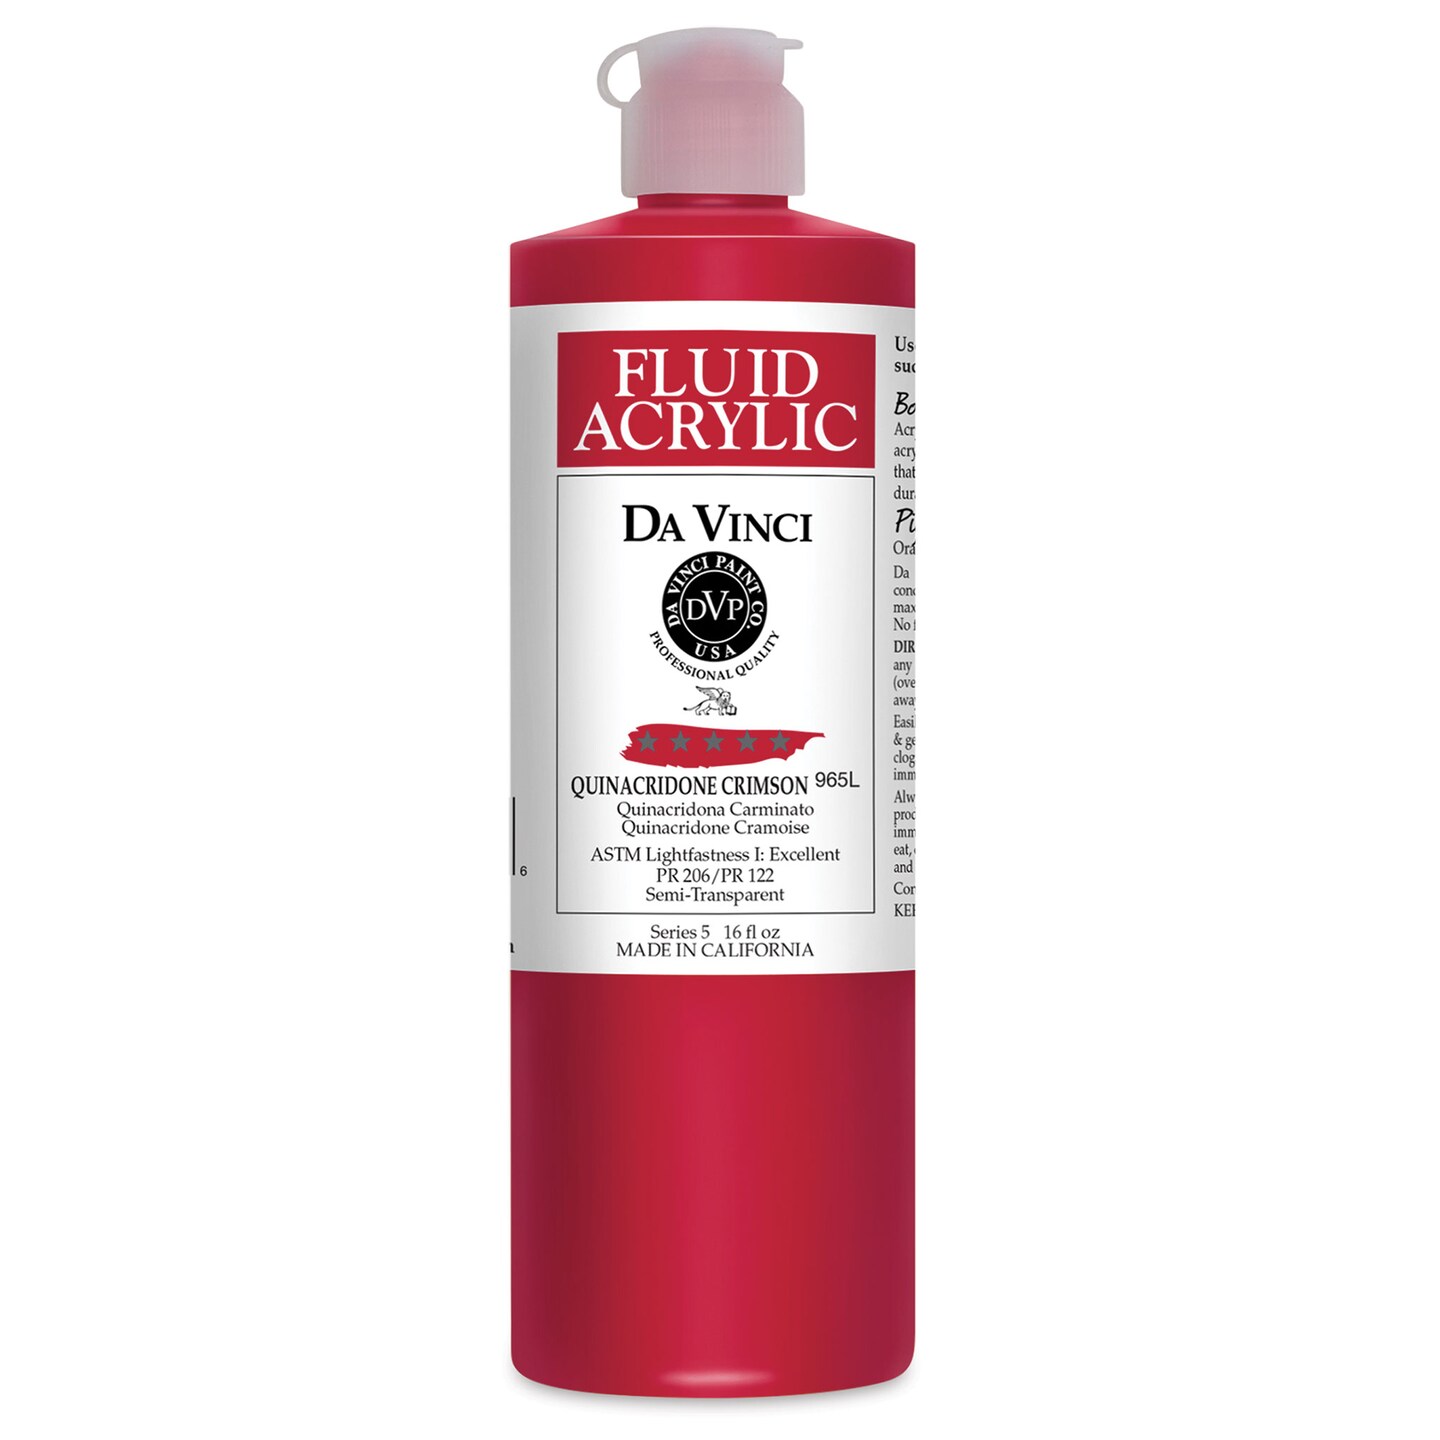 Da Vinci Fluid Acrylics - Quinacridone Crimson, 16 oz bottle